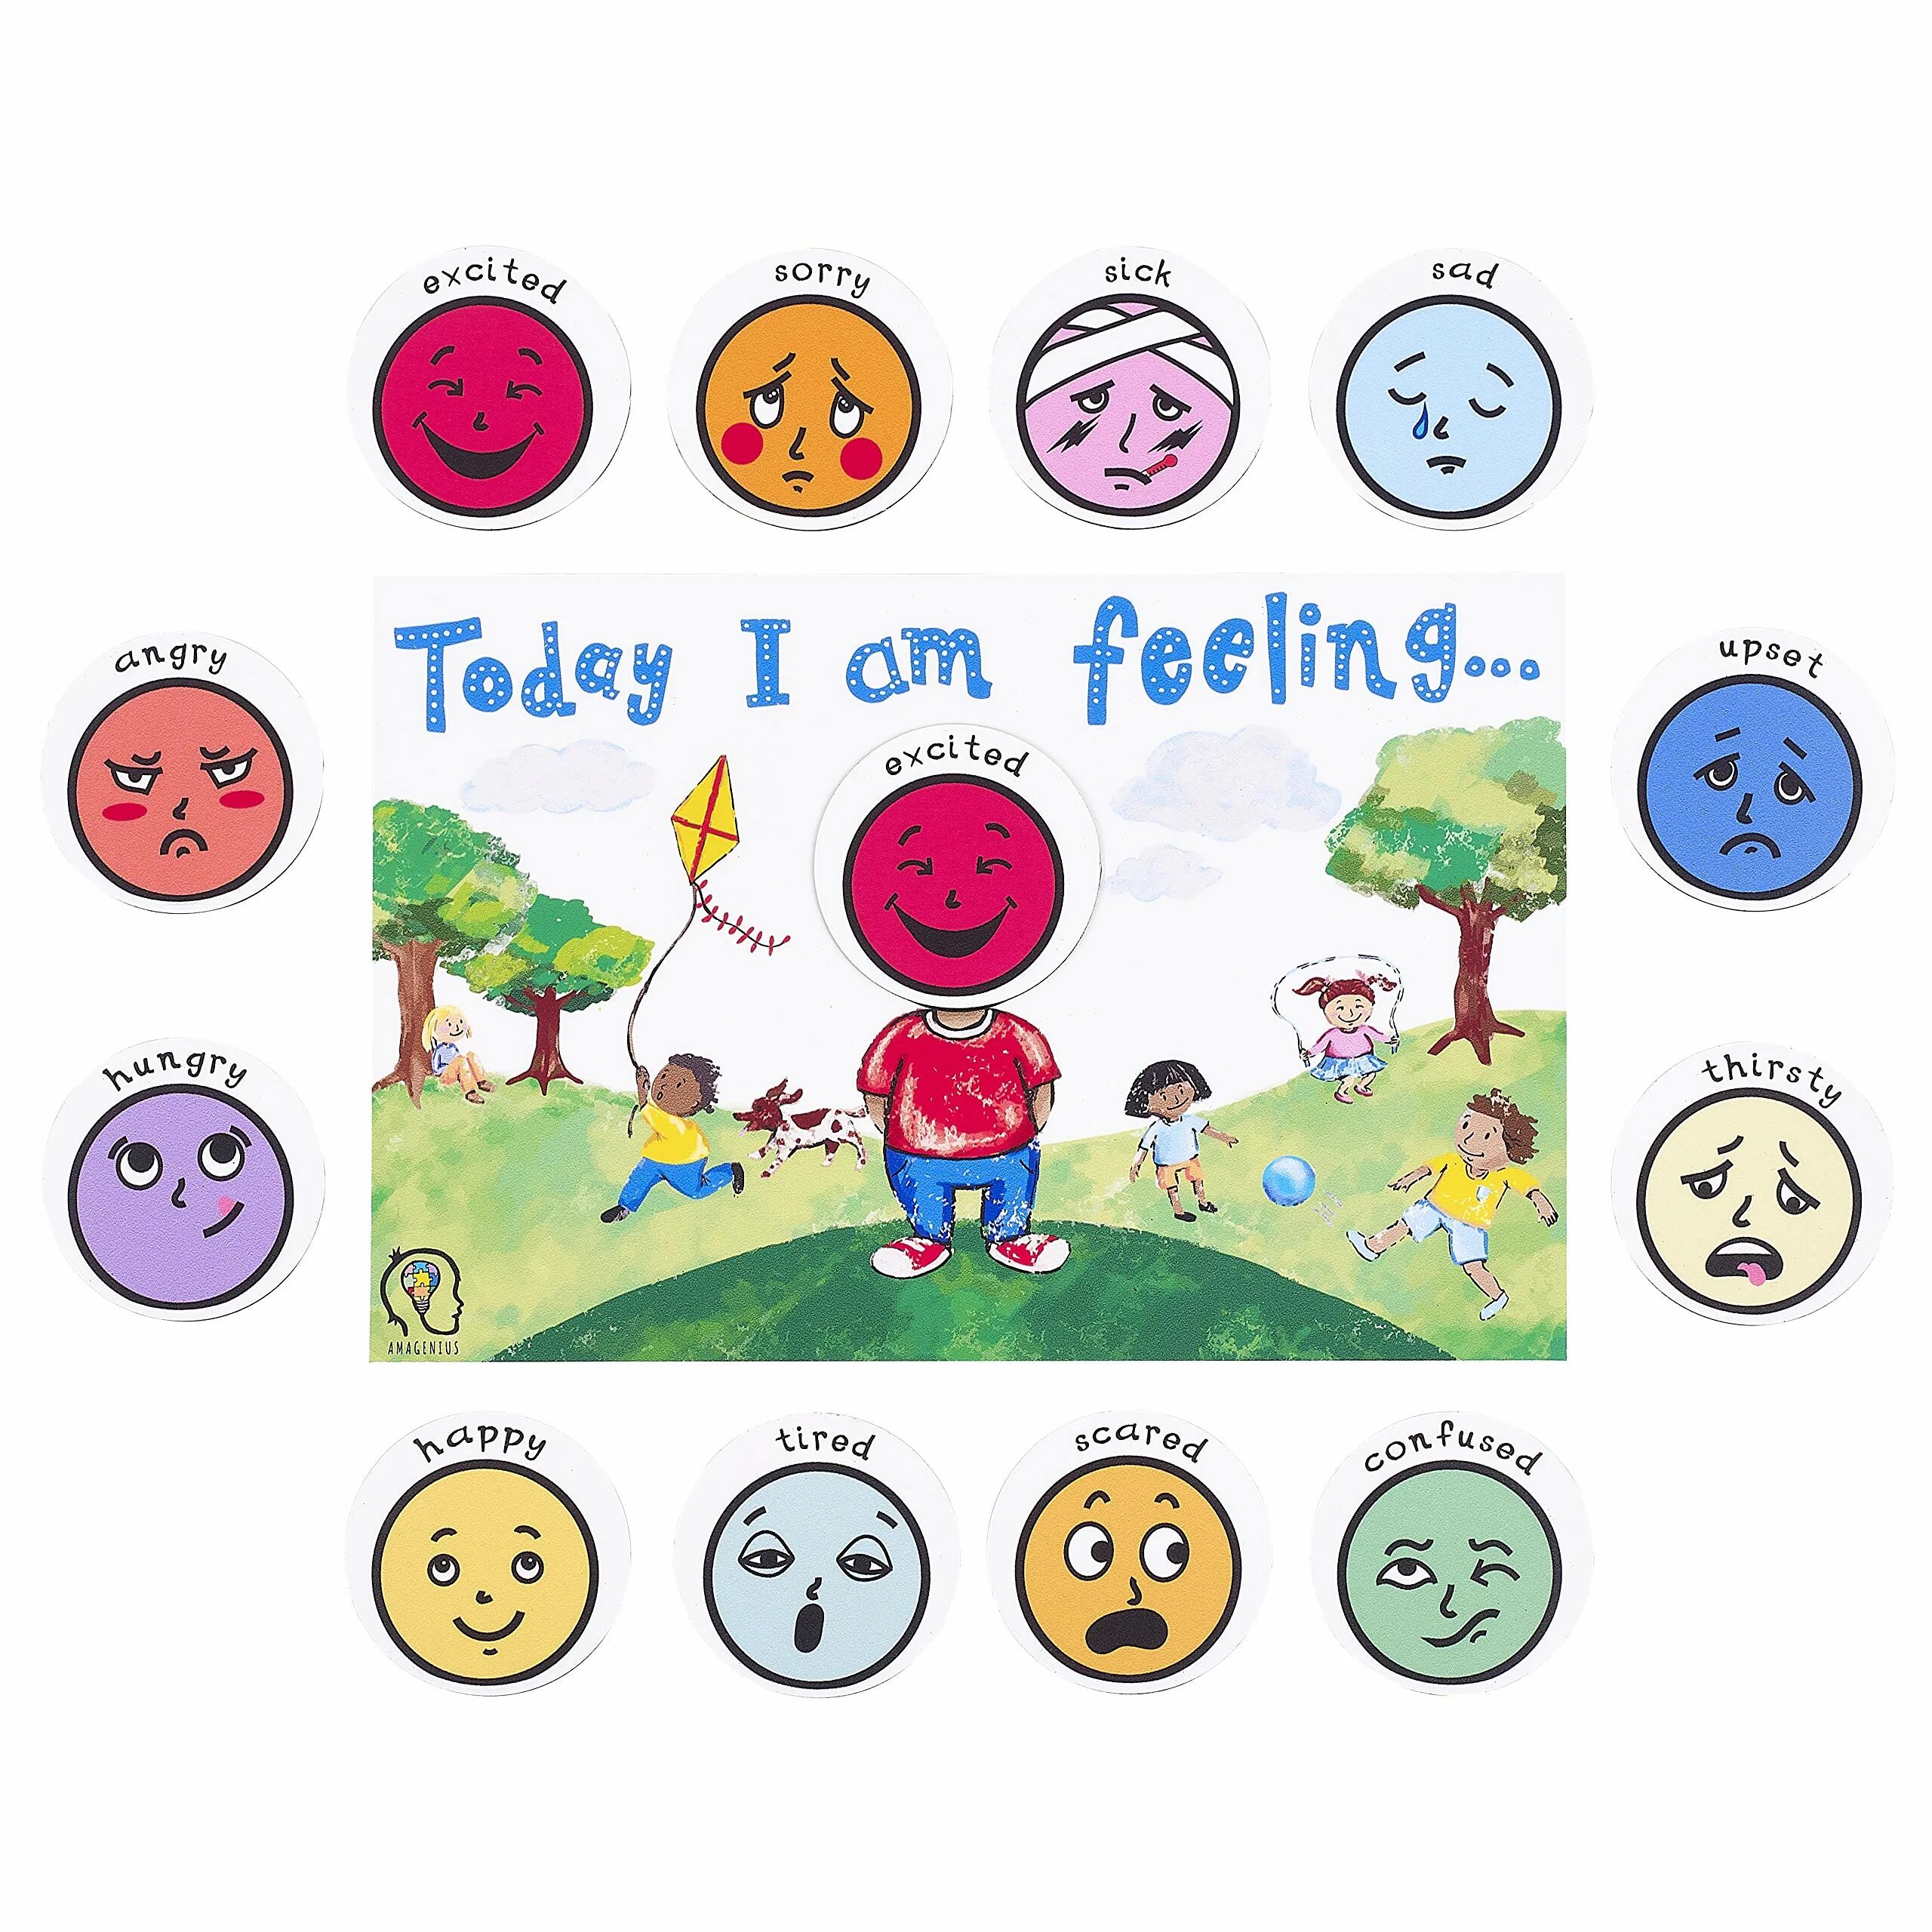 Www feeling com. Feelings Chart. Feelings and emotions Flashcards. Feelings Translator. Feelings and emotions column.